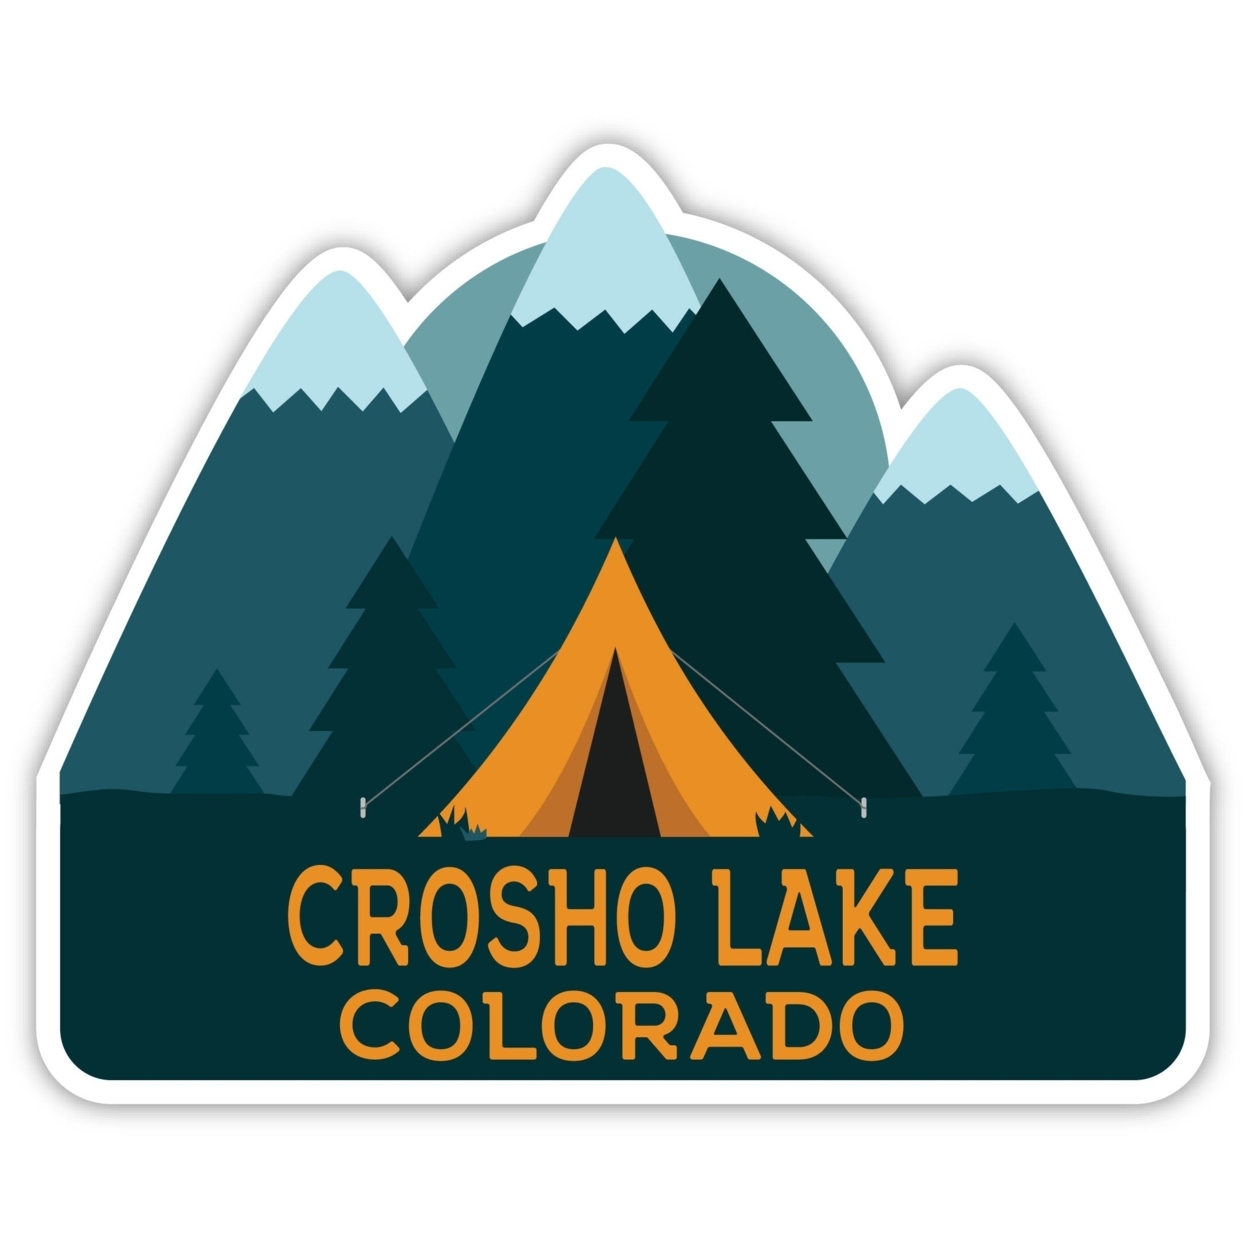 Crosho Lake Colorado Souvenir Decorative Stickers (Choose Theme And Size) - Single Unit, 4-Inch, Tent